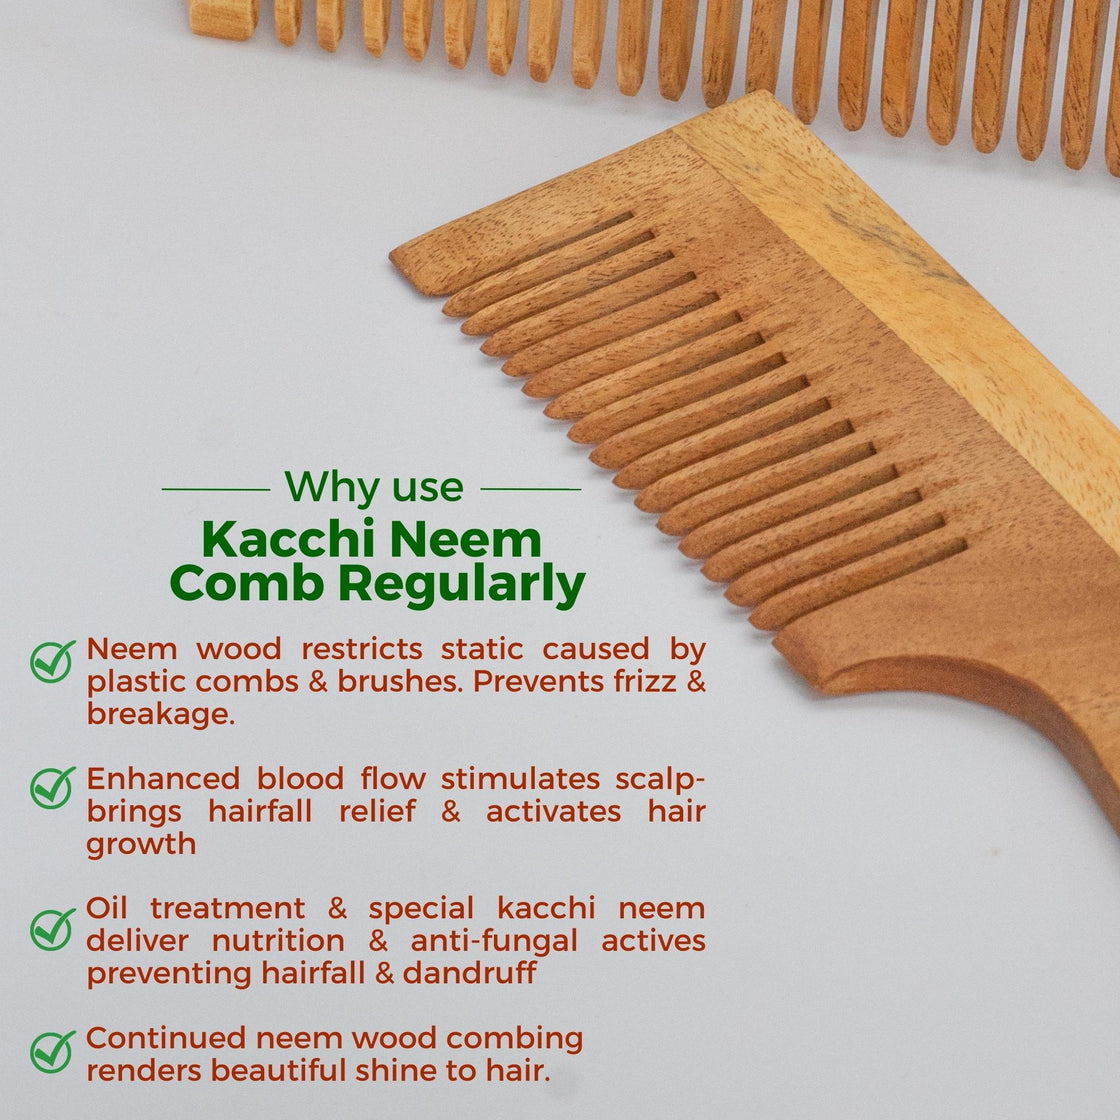 Allure Neem Wood Pack of 2 Detangle Hair Combs